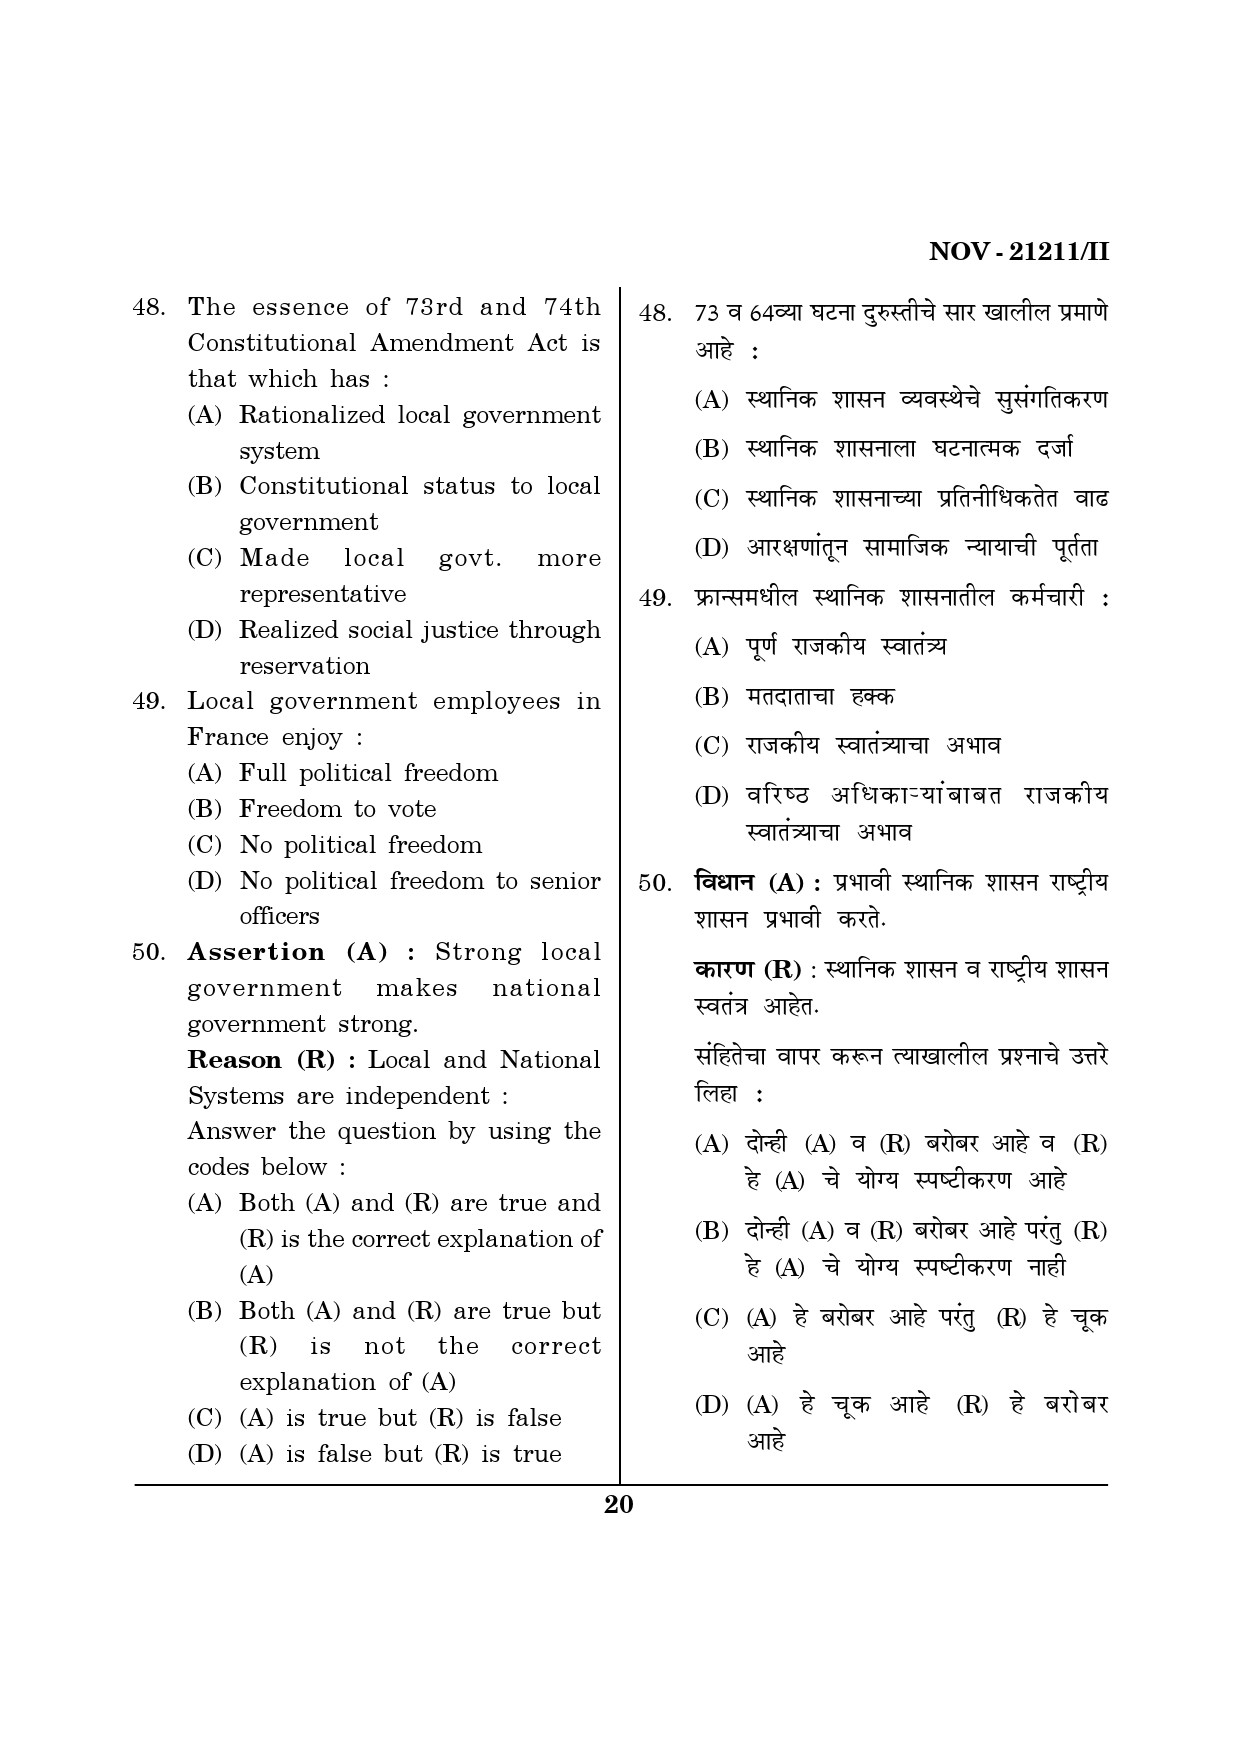 Maharashtra SET Public Administration Question Paper II November 2011 20